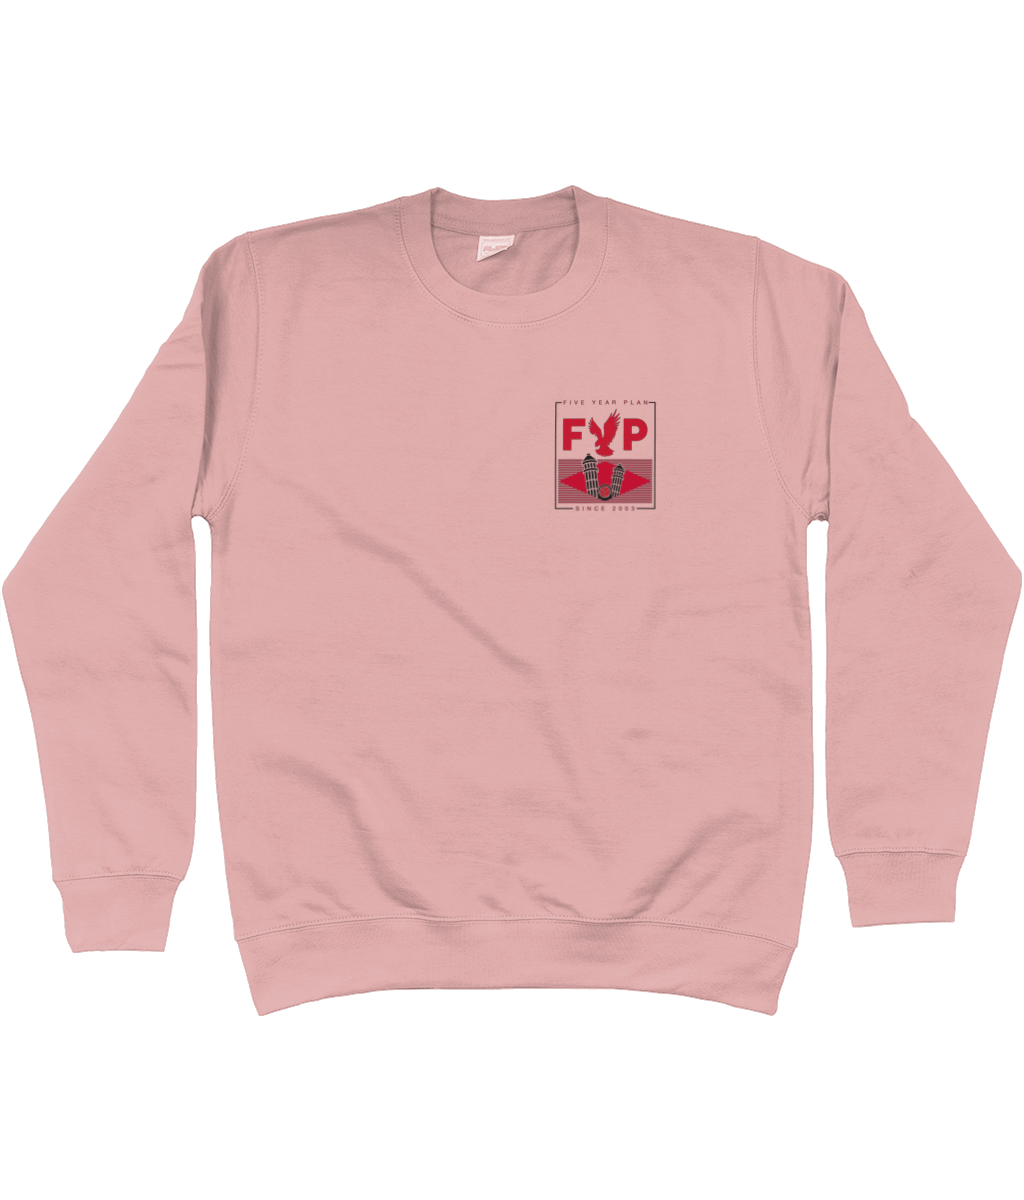 FYP Palace - Sweatshirt